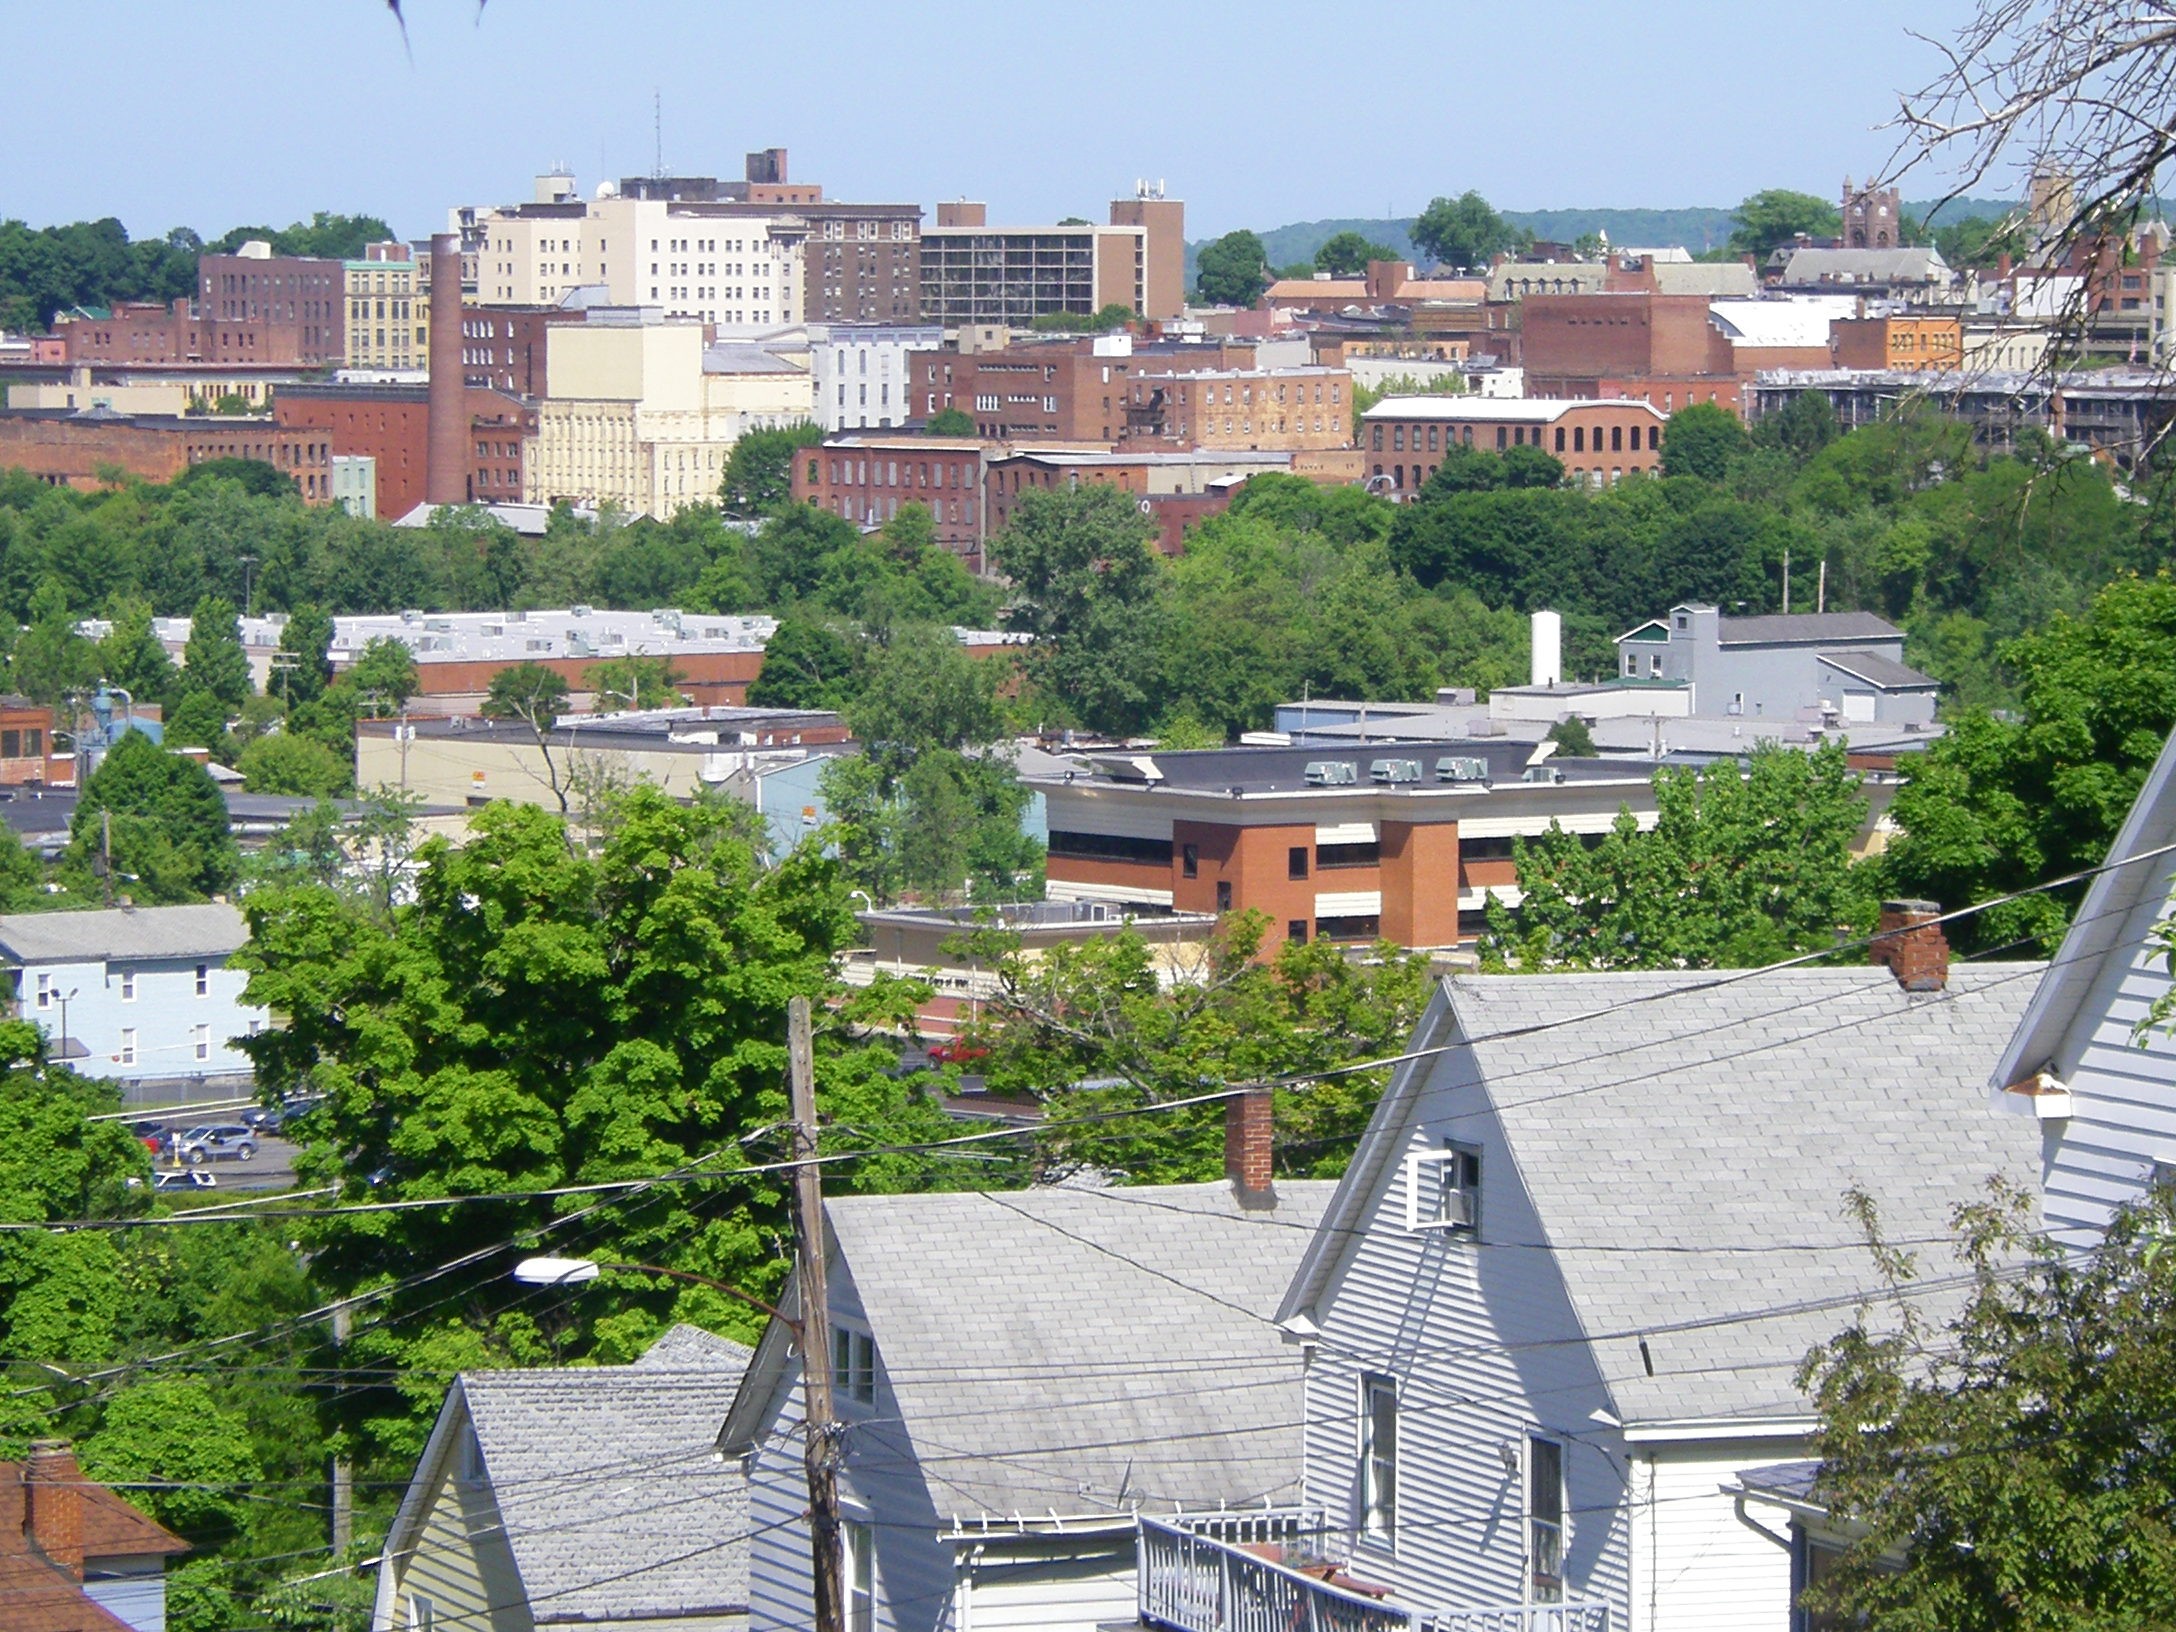 View of downtown Jamestown from adjacent neighborhood